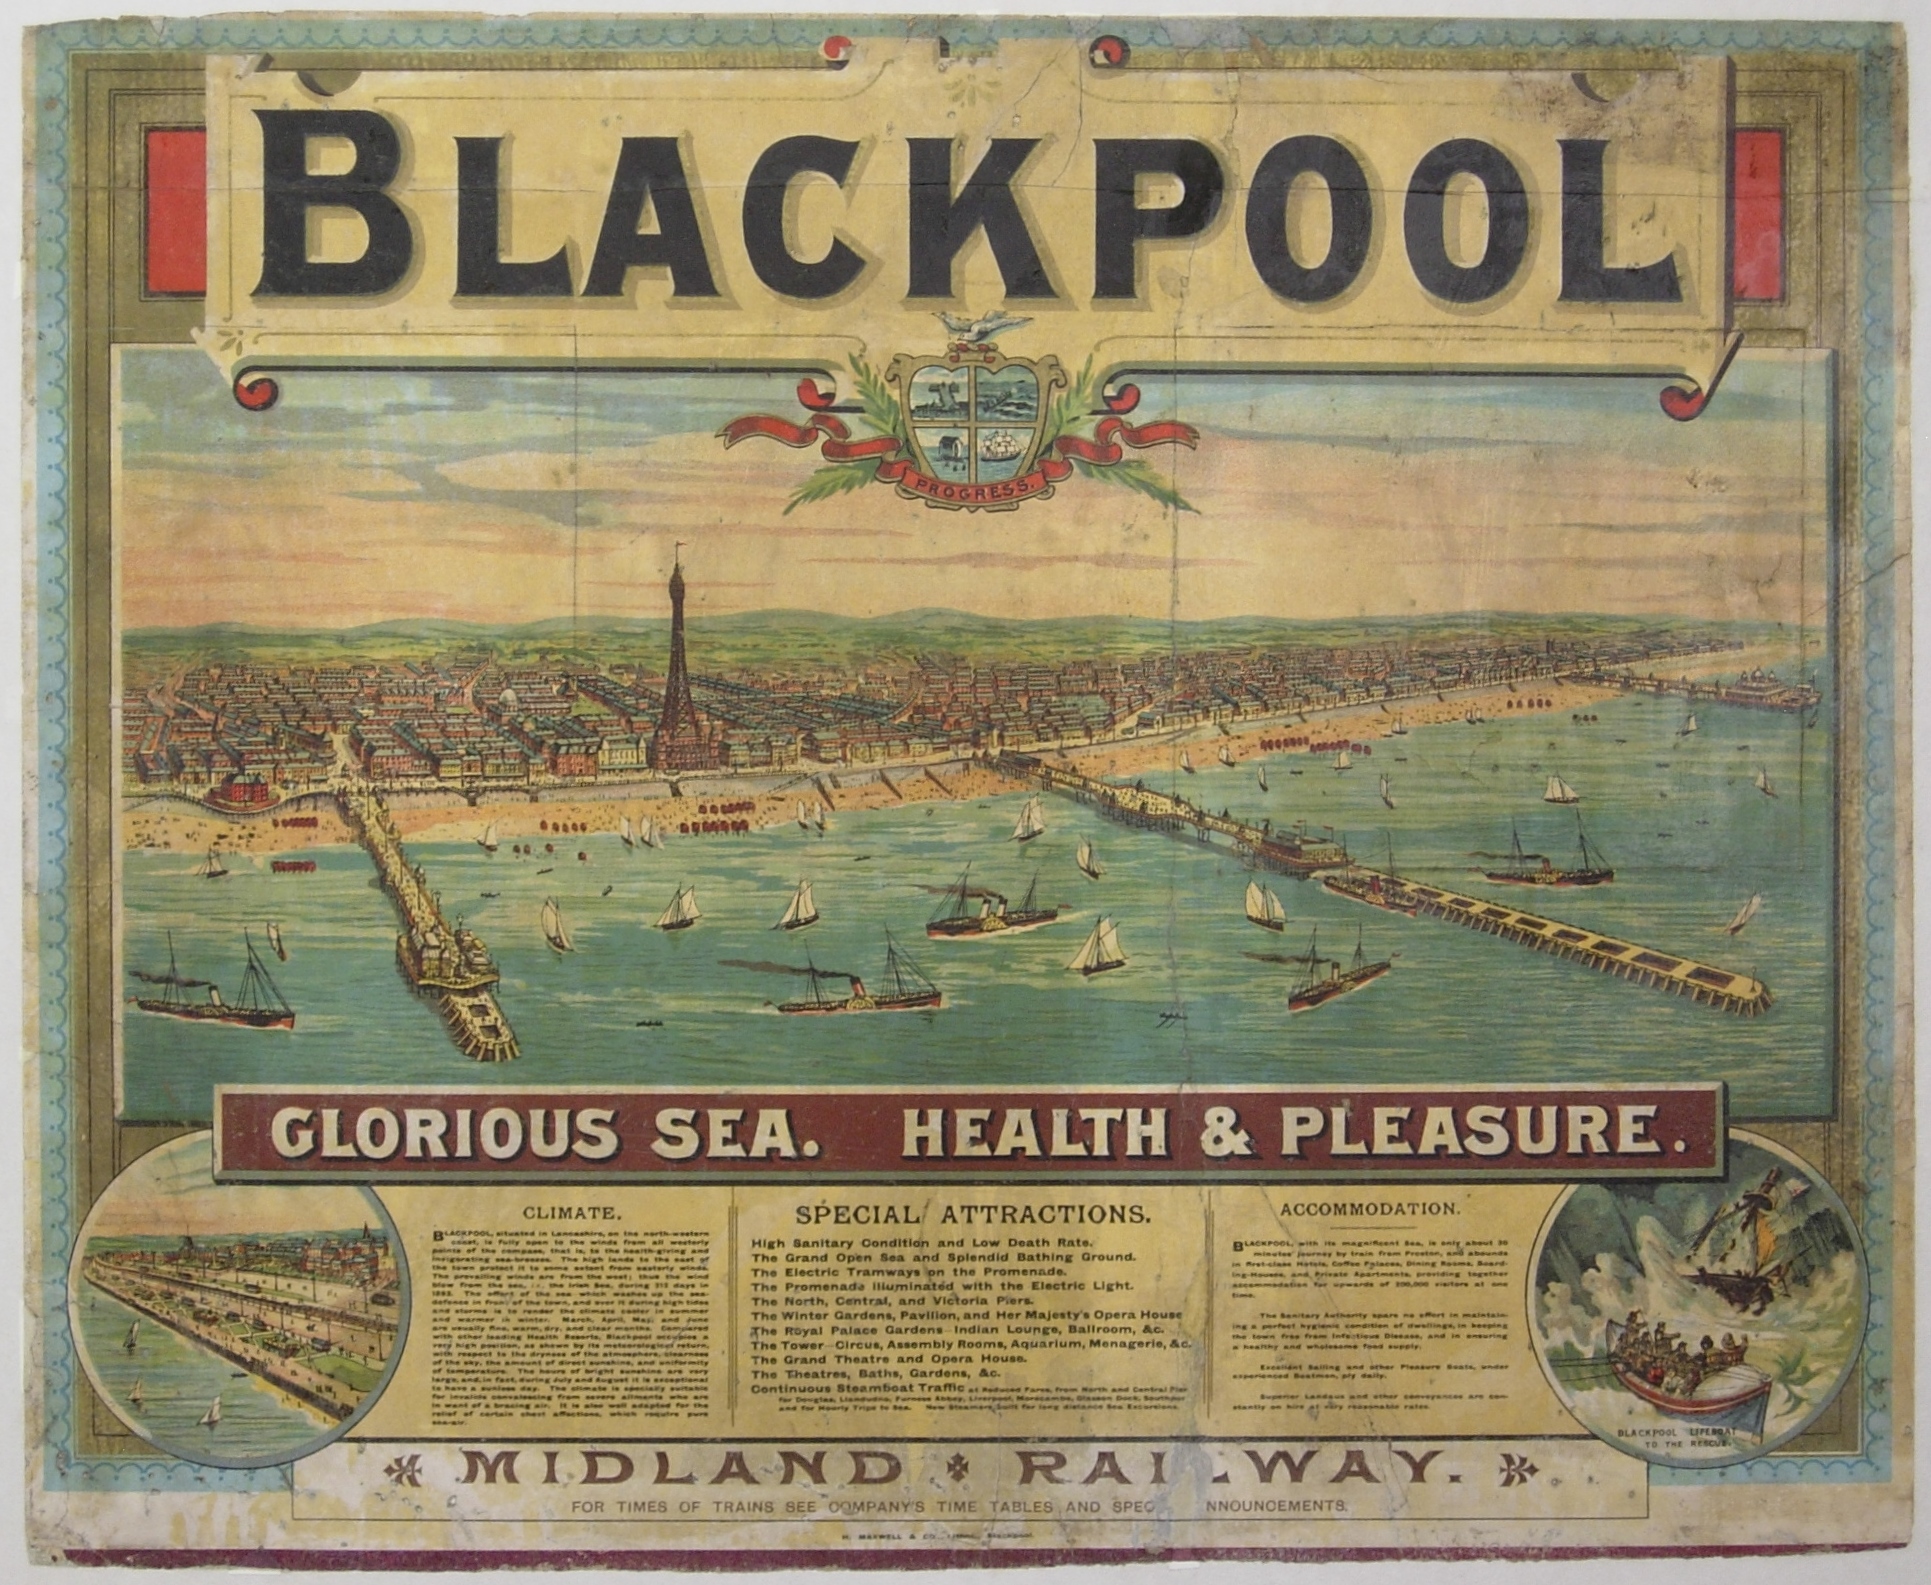 Blackpool poster, after conservation